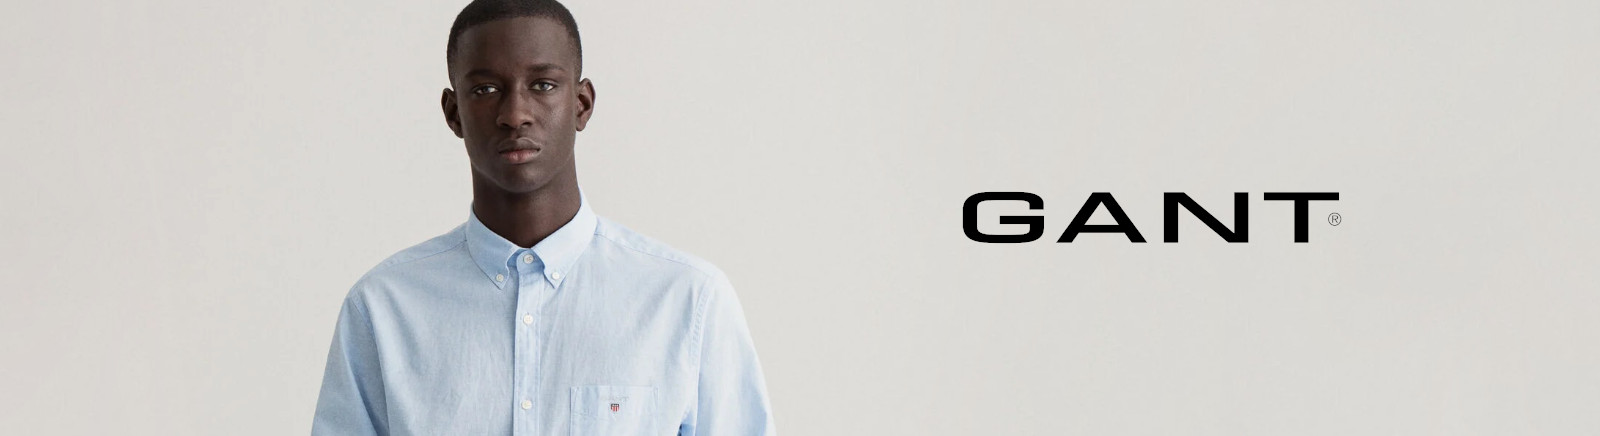 Prange: Gant Sneaker für Herren online shoppen